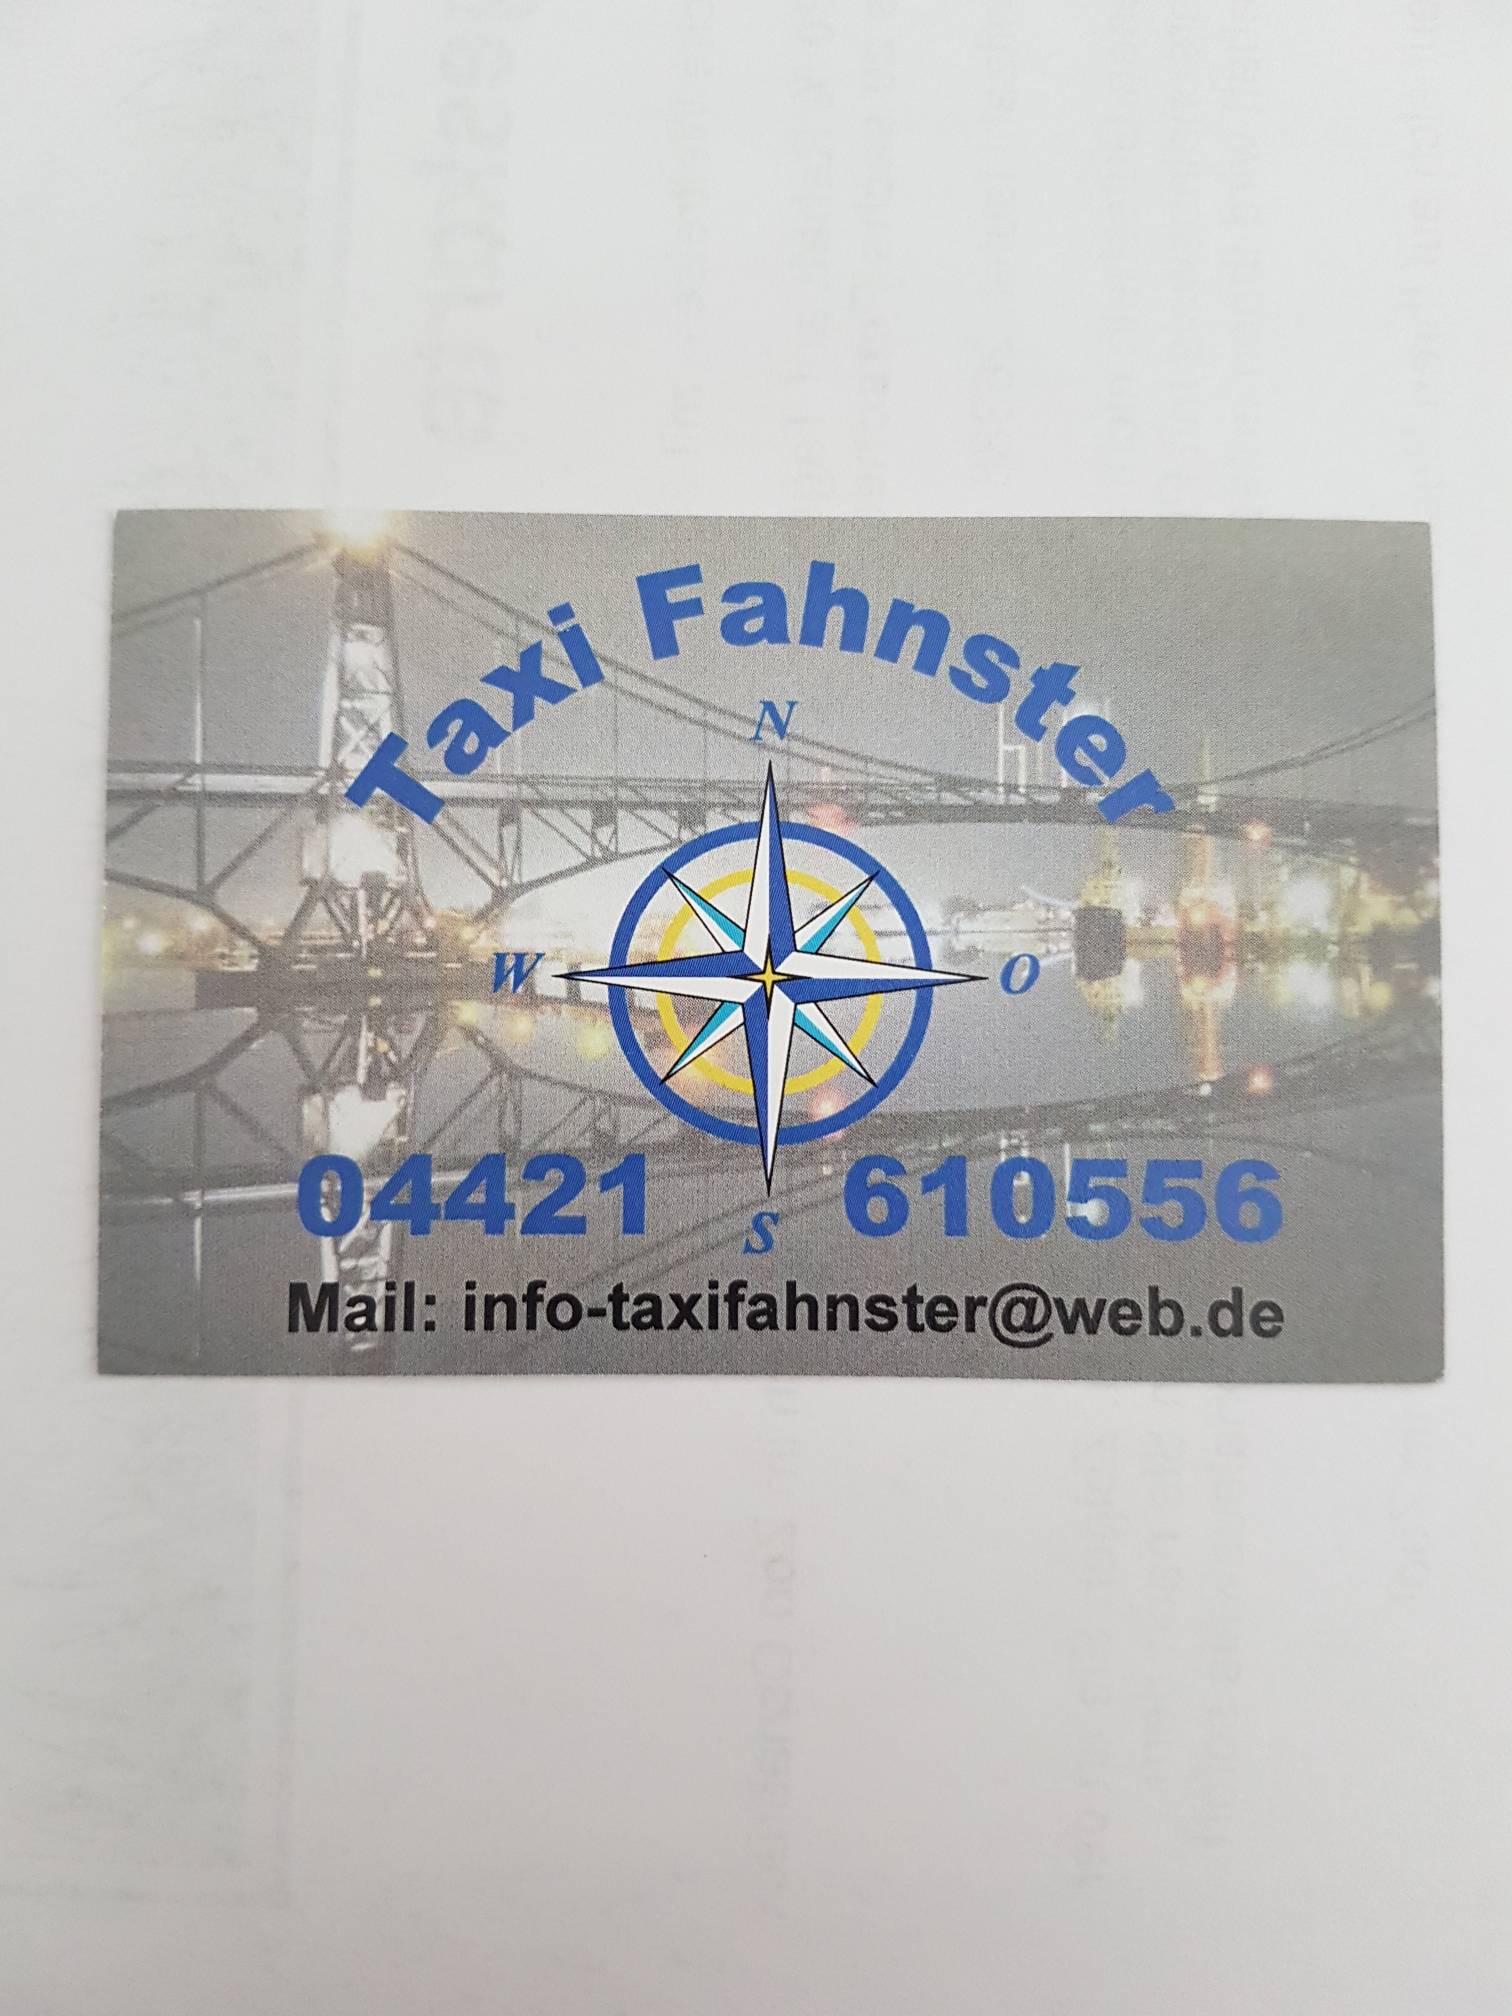 Taxi Fahnster
Sengwarder Str. 88
26388 Wilhelmshaven